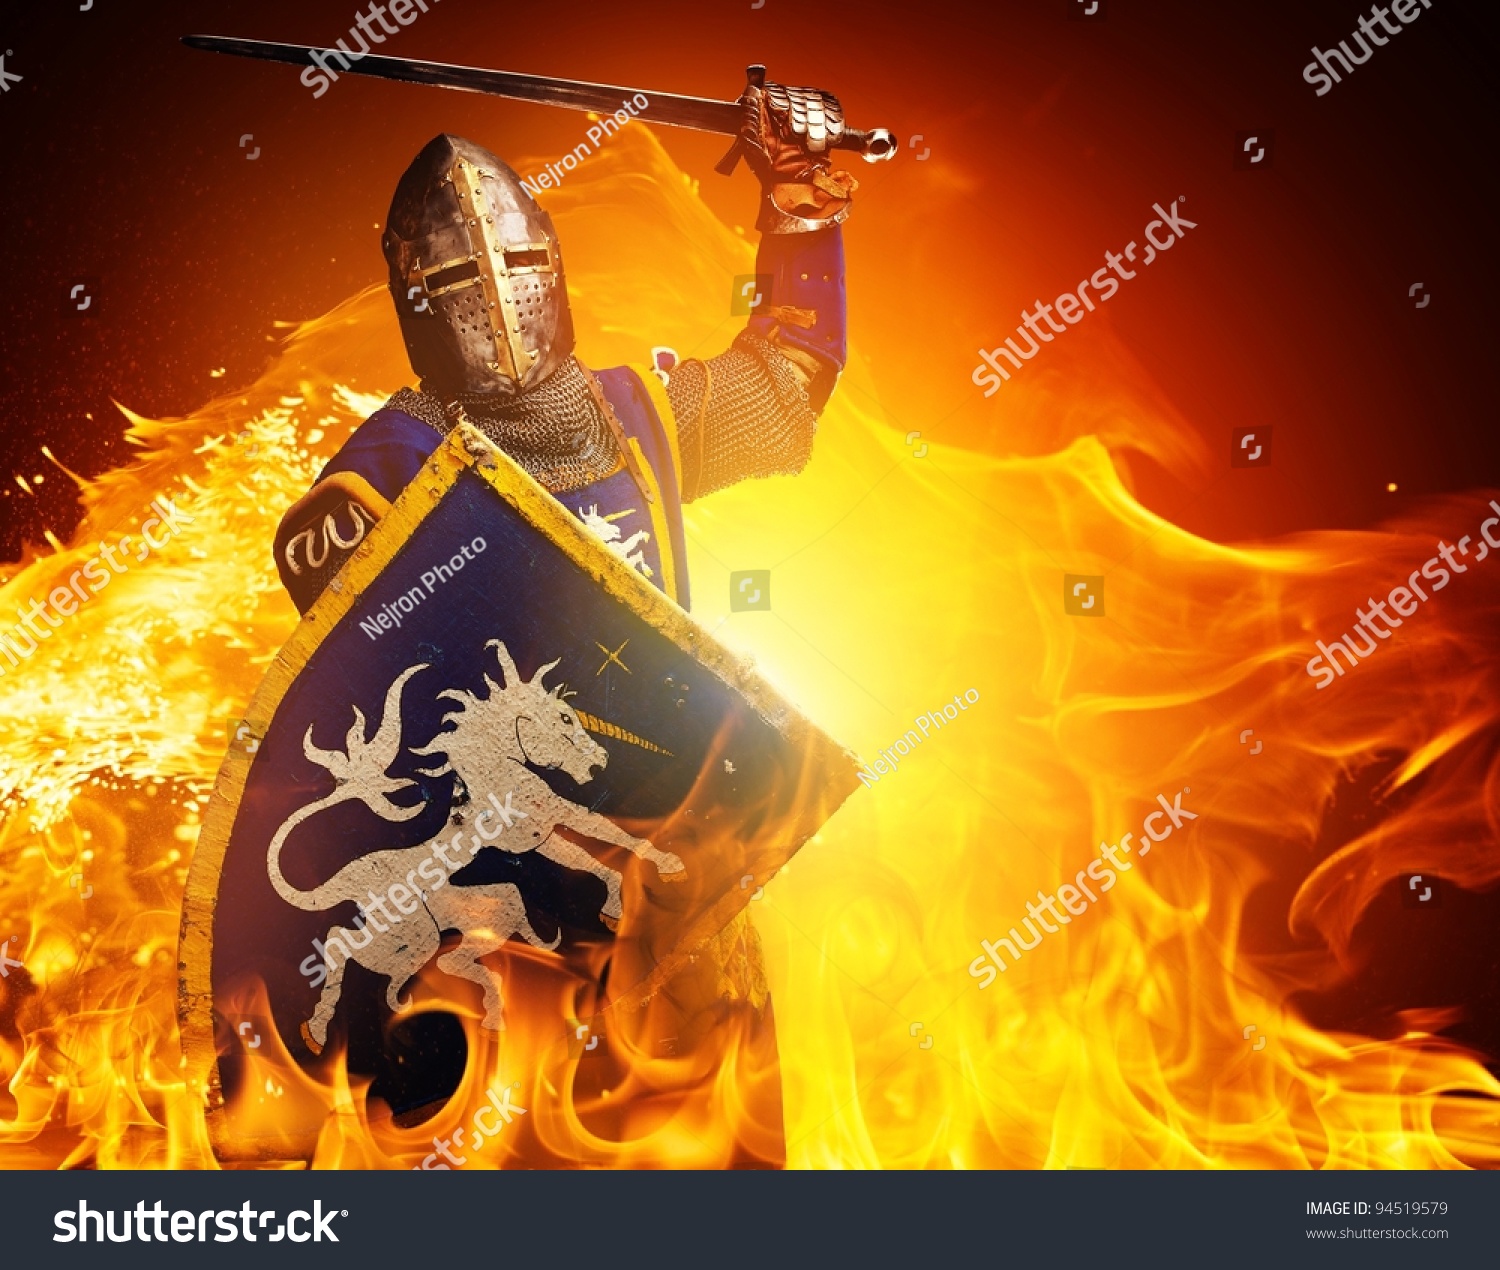 PowerPoint Template crusades war medieval knight (ulmiumou)